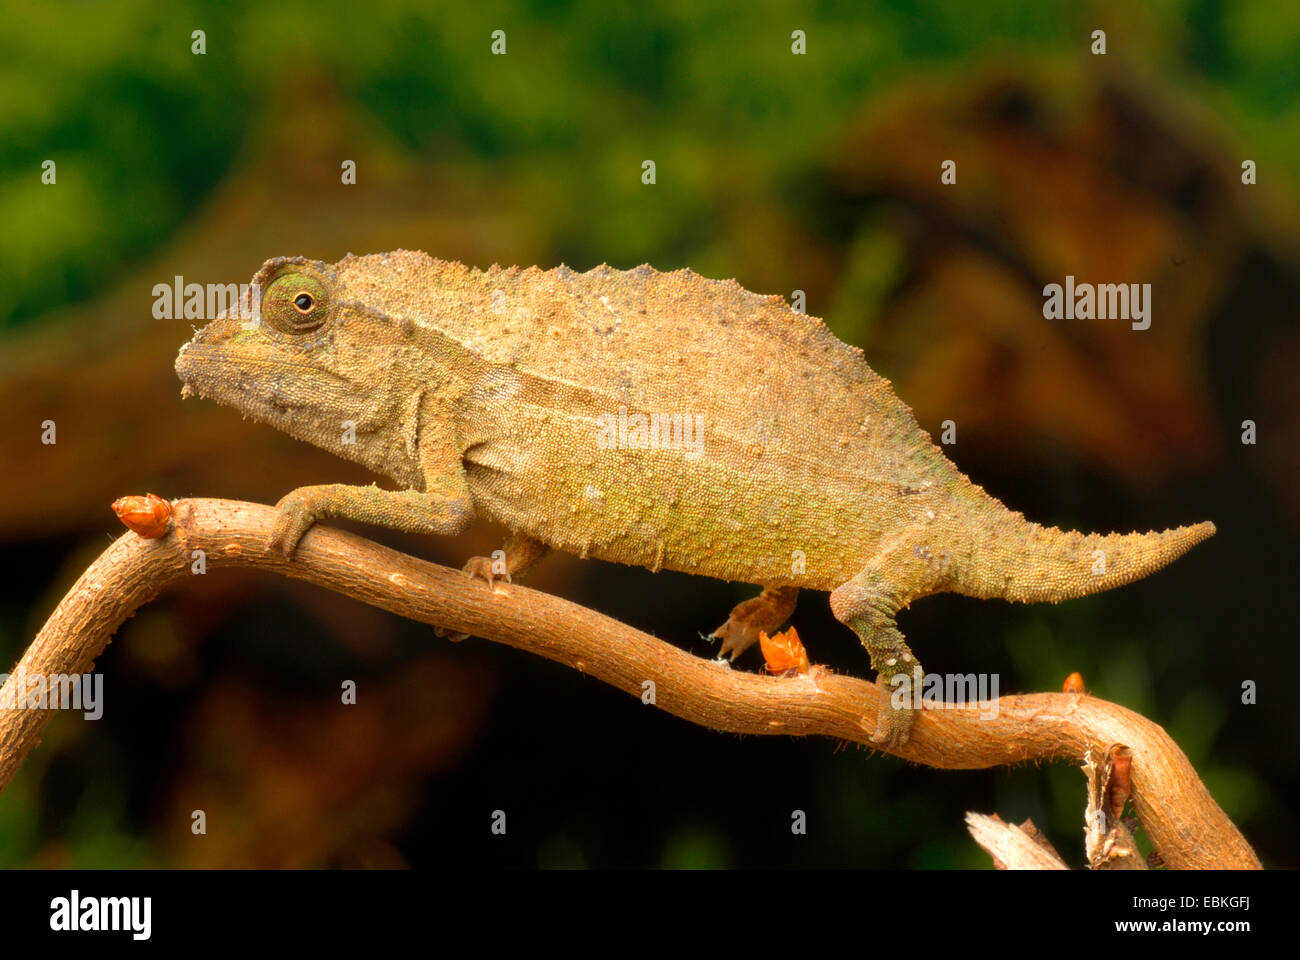 Stump Tailed Chameleon (Rieppeleon brevicaudatus), on an branch Stock Photo